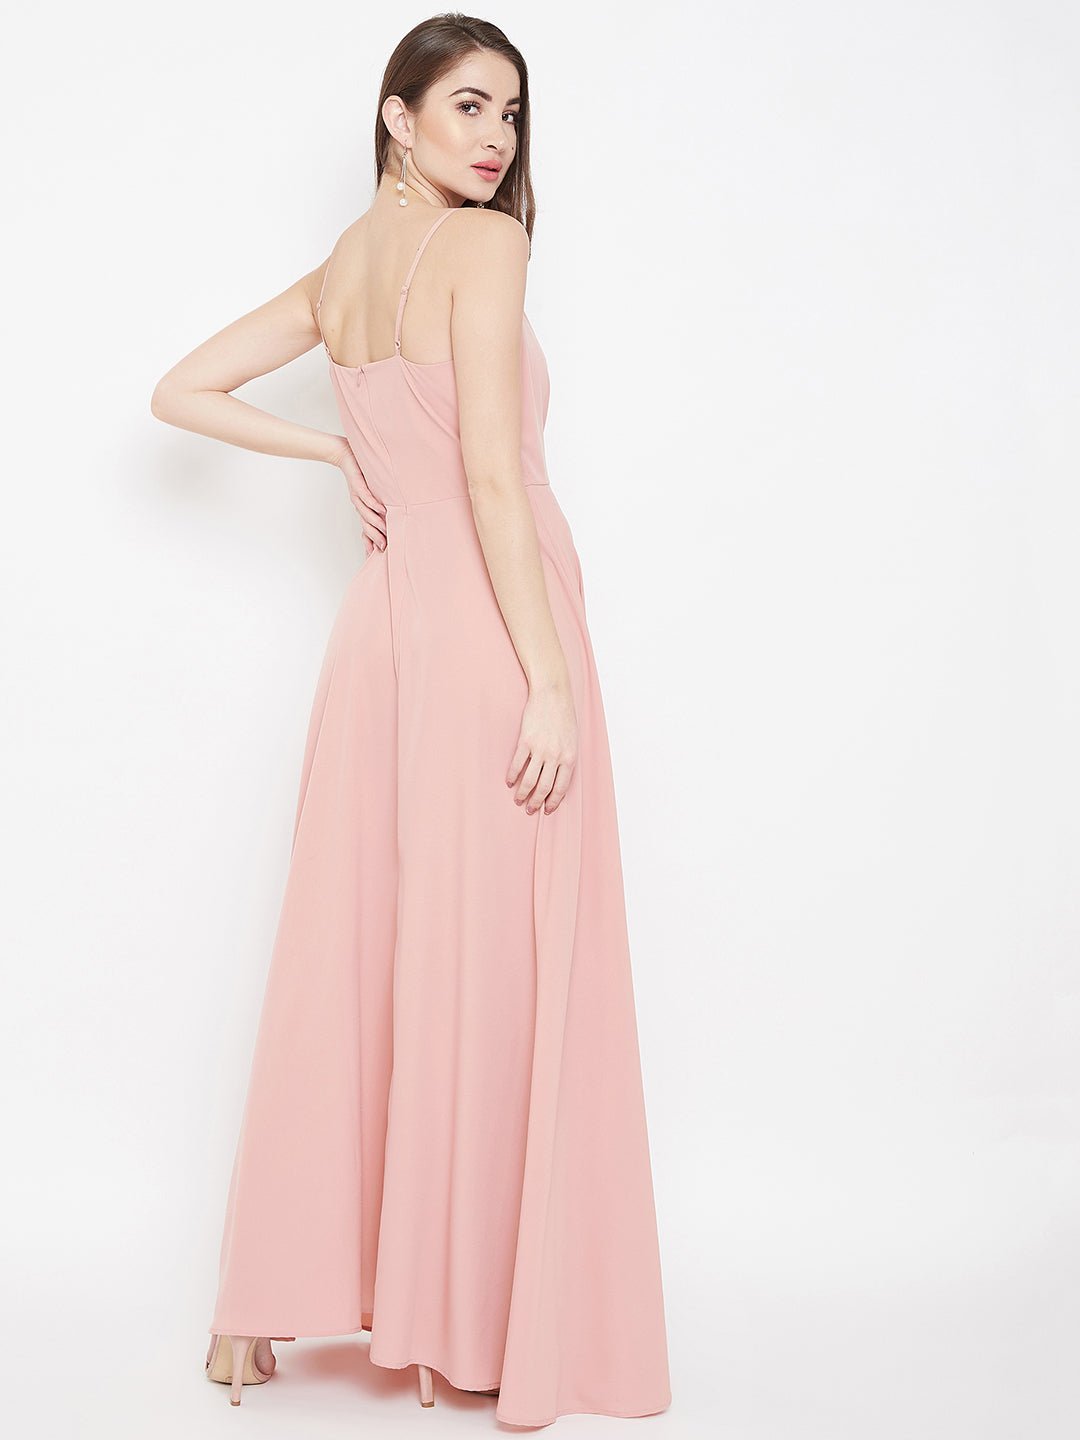 Folk Republic Women Solid Light Pink V-Neck Sleeveless Crepe Thigh-High Slit A-Line Maxi Dress - #folk republic#